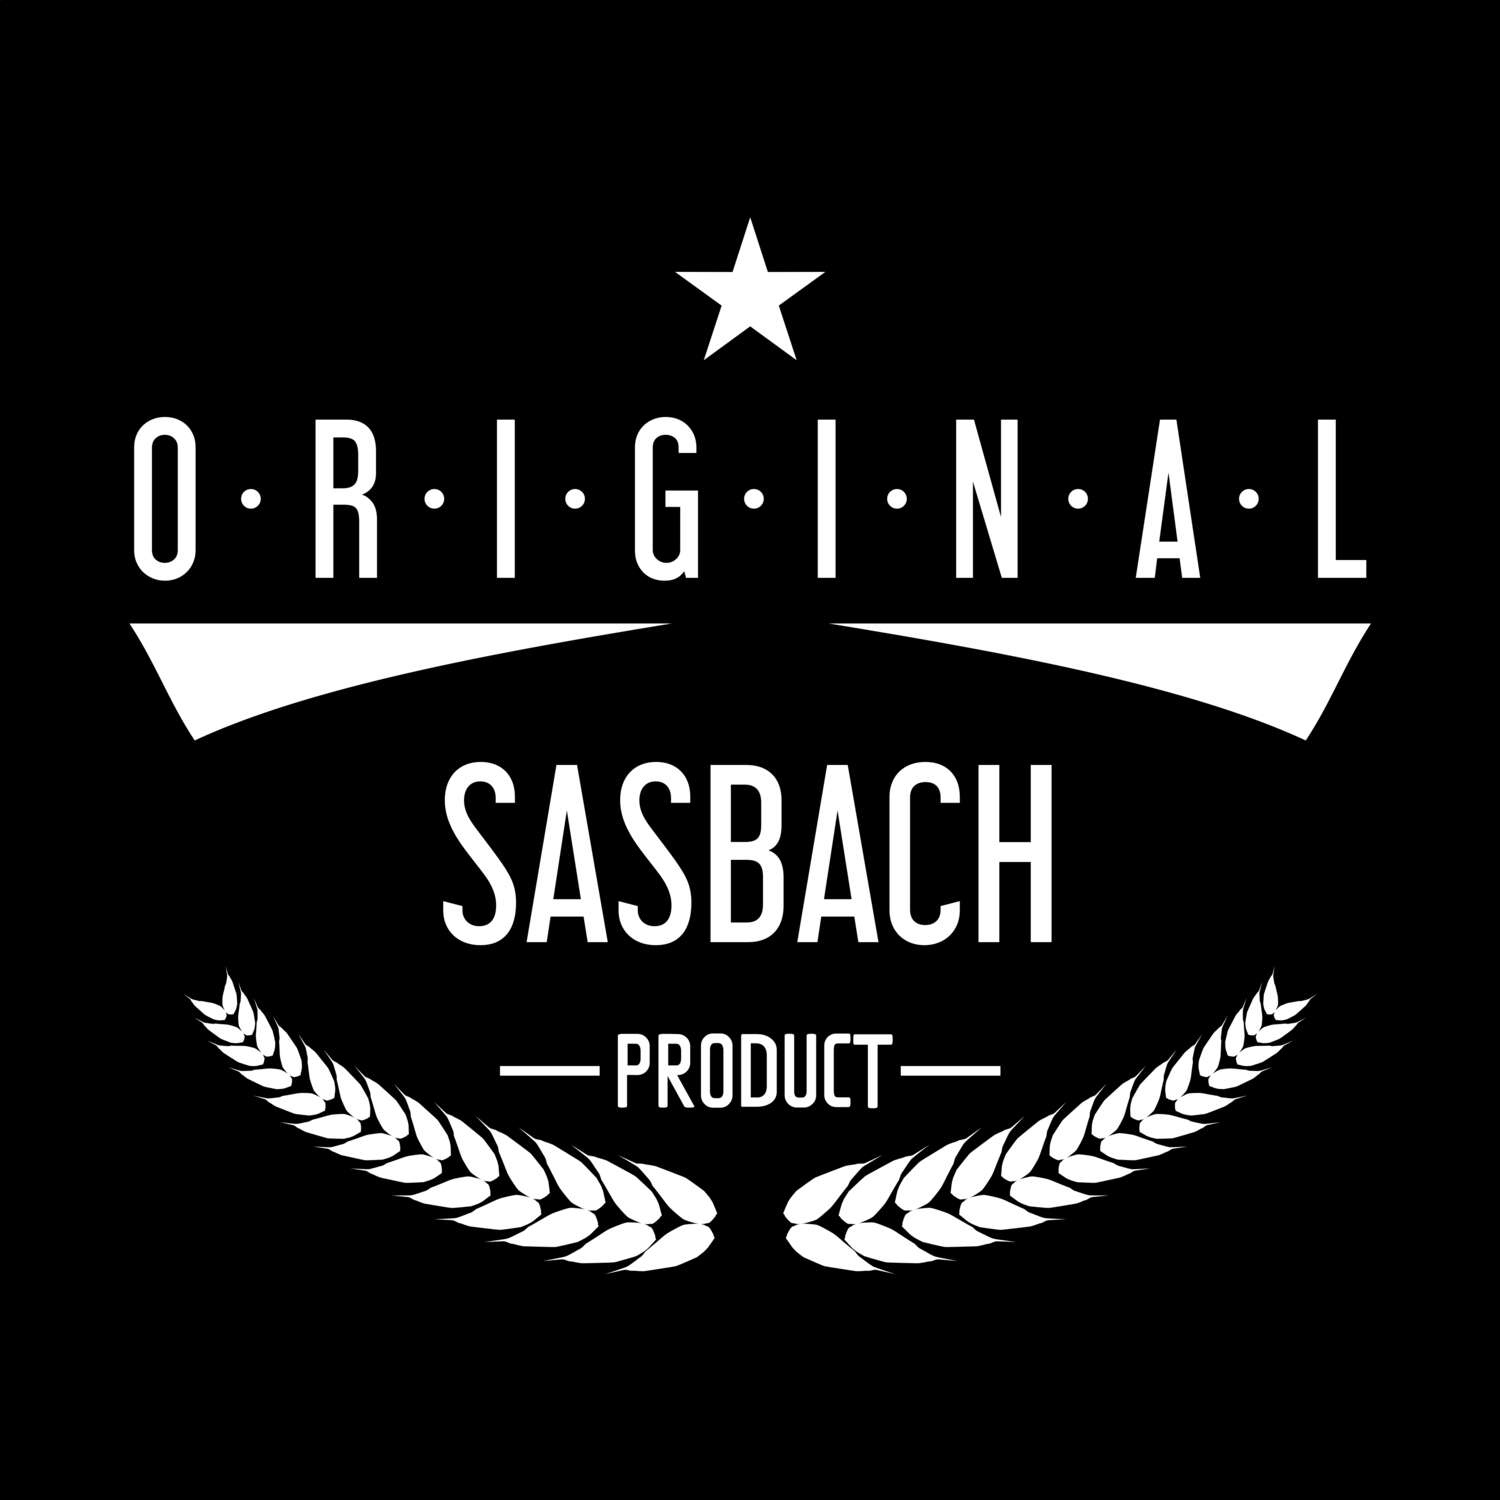 Sasbach T-Shirt »Original Product«